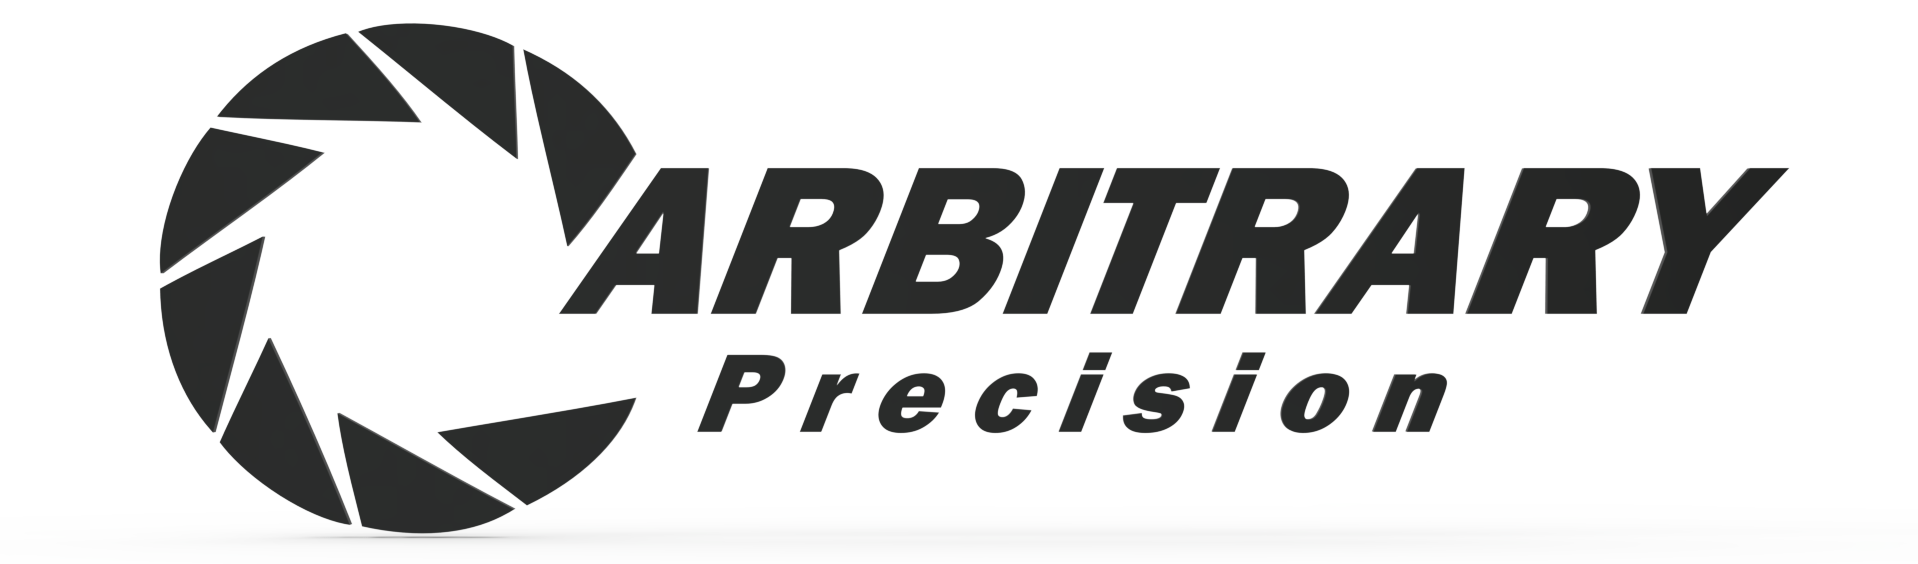 Arbitrary Precision logo